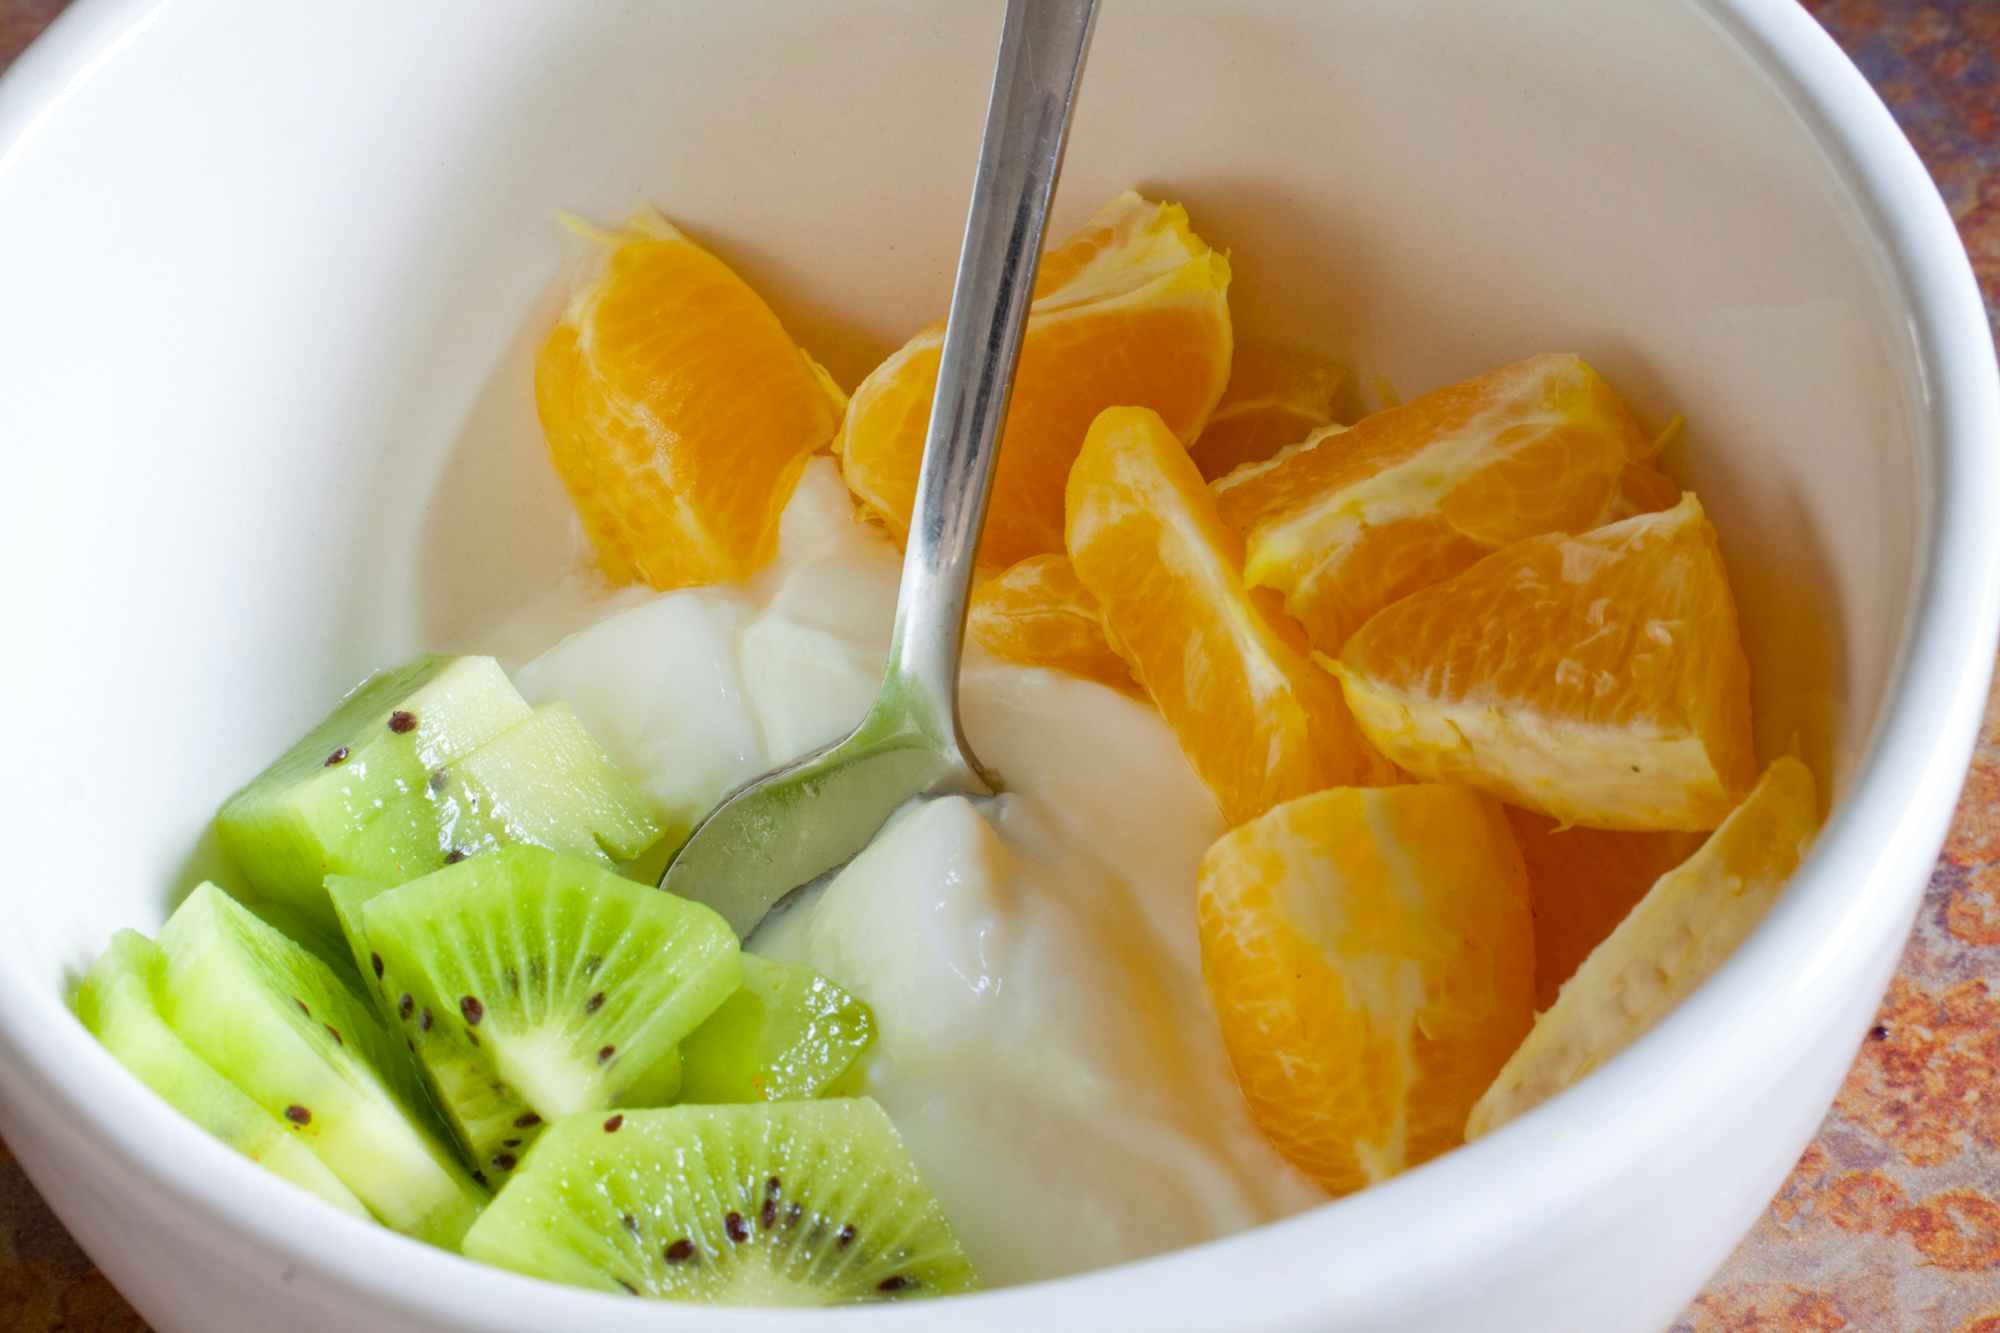 A close up on a bowl with kiwi, yogurt, and mandarin oranges arranged to look like the Irish flag